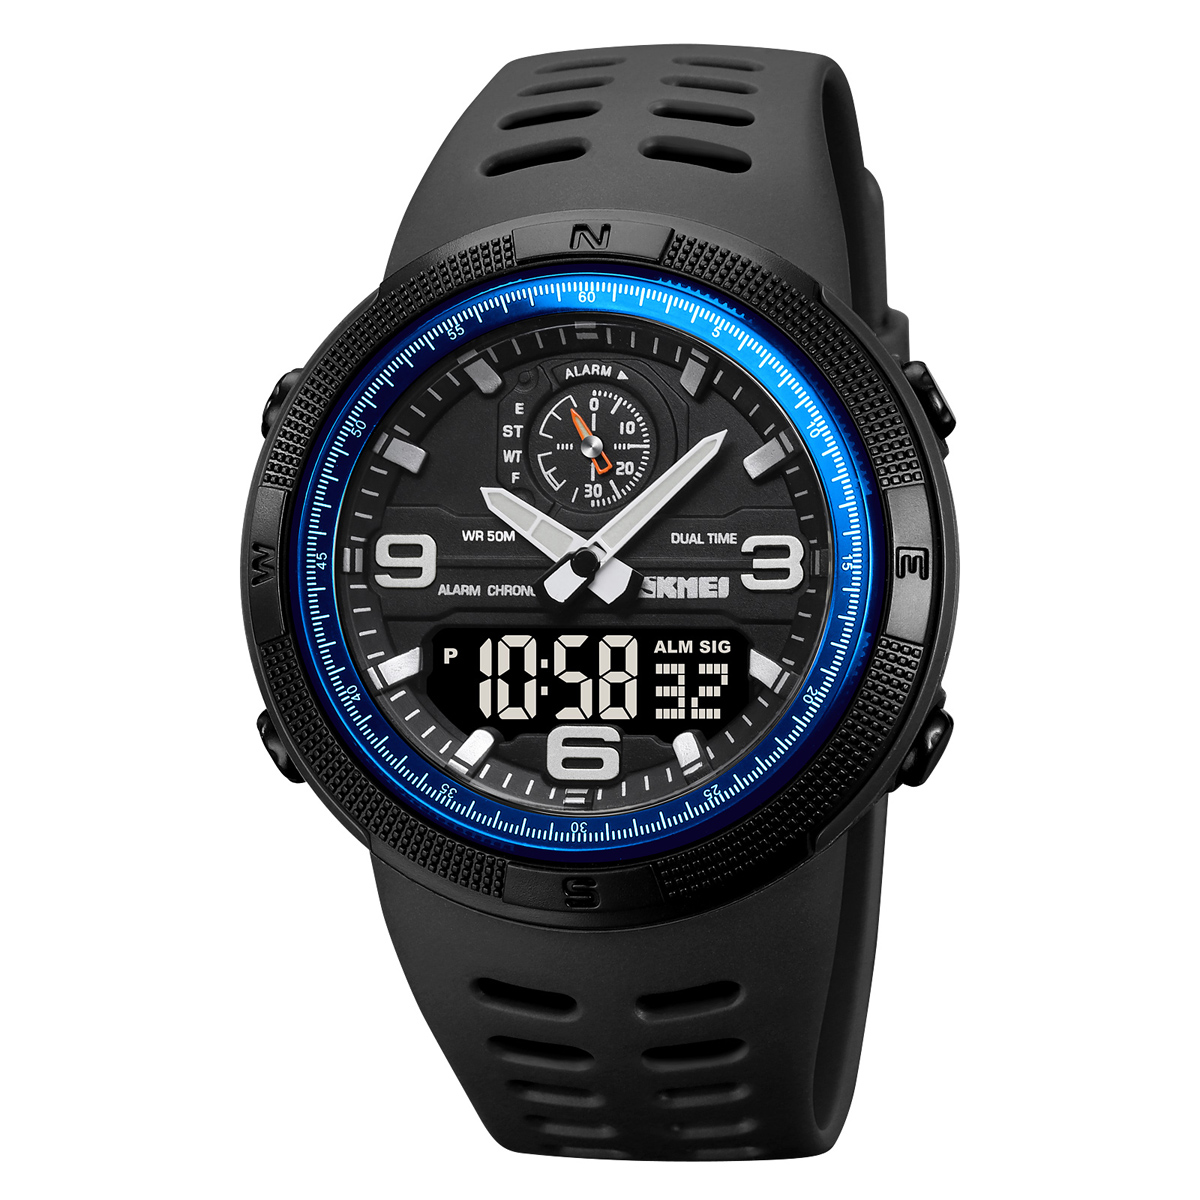 SKMEI 1655 Popular Dual Time Digital Watch